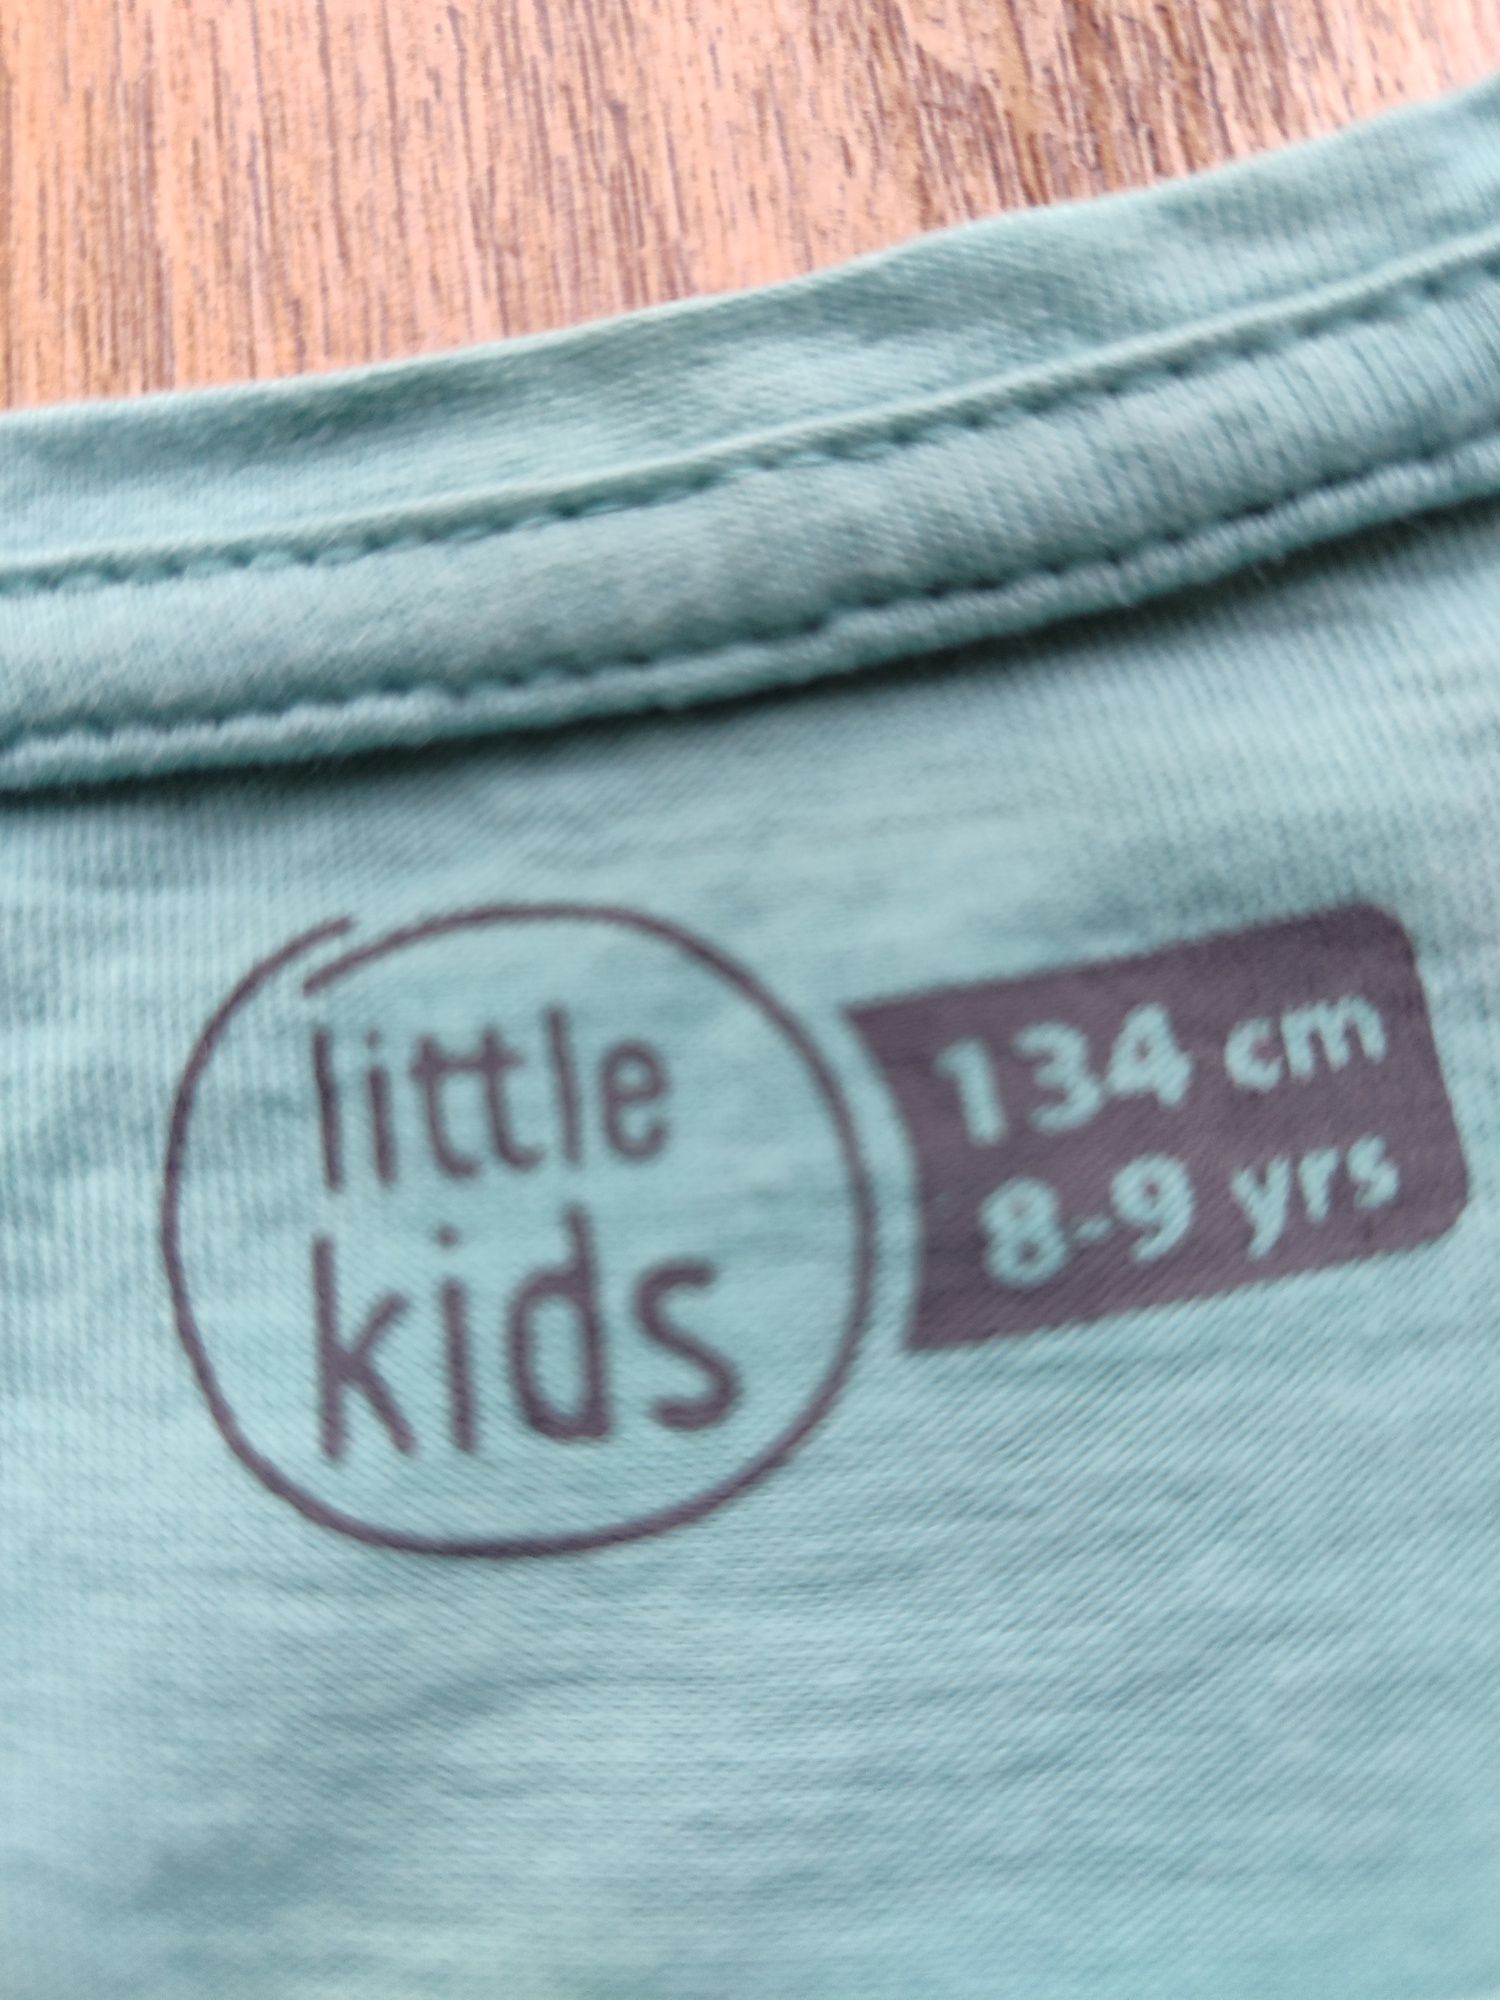 Turkusowa bluzka z myszkami 134 Little Kids baweniana koszulka